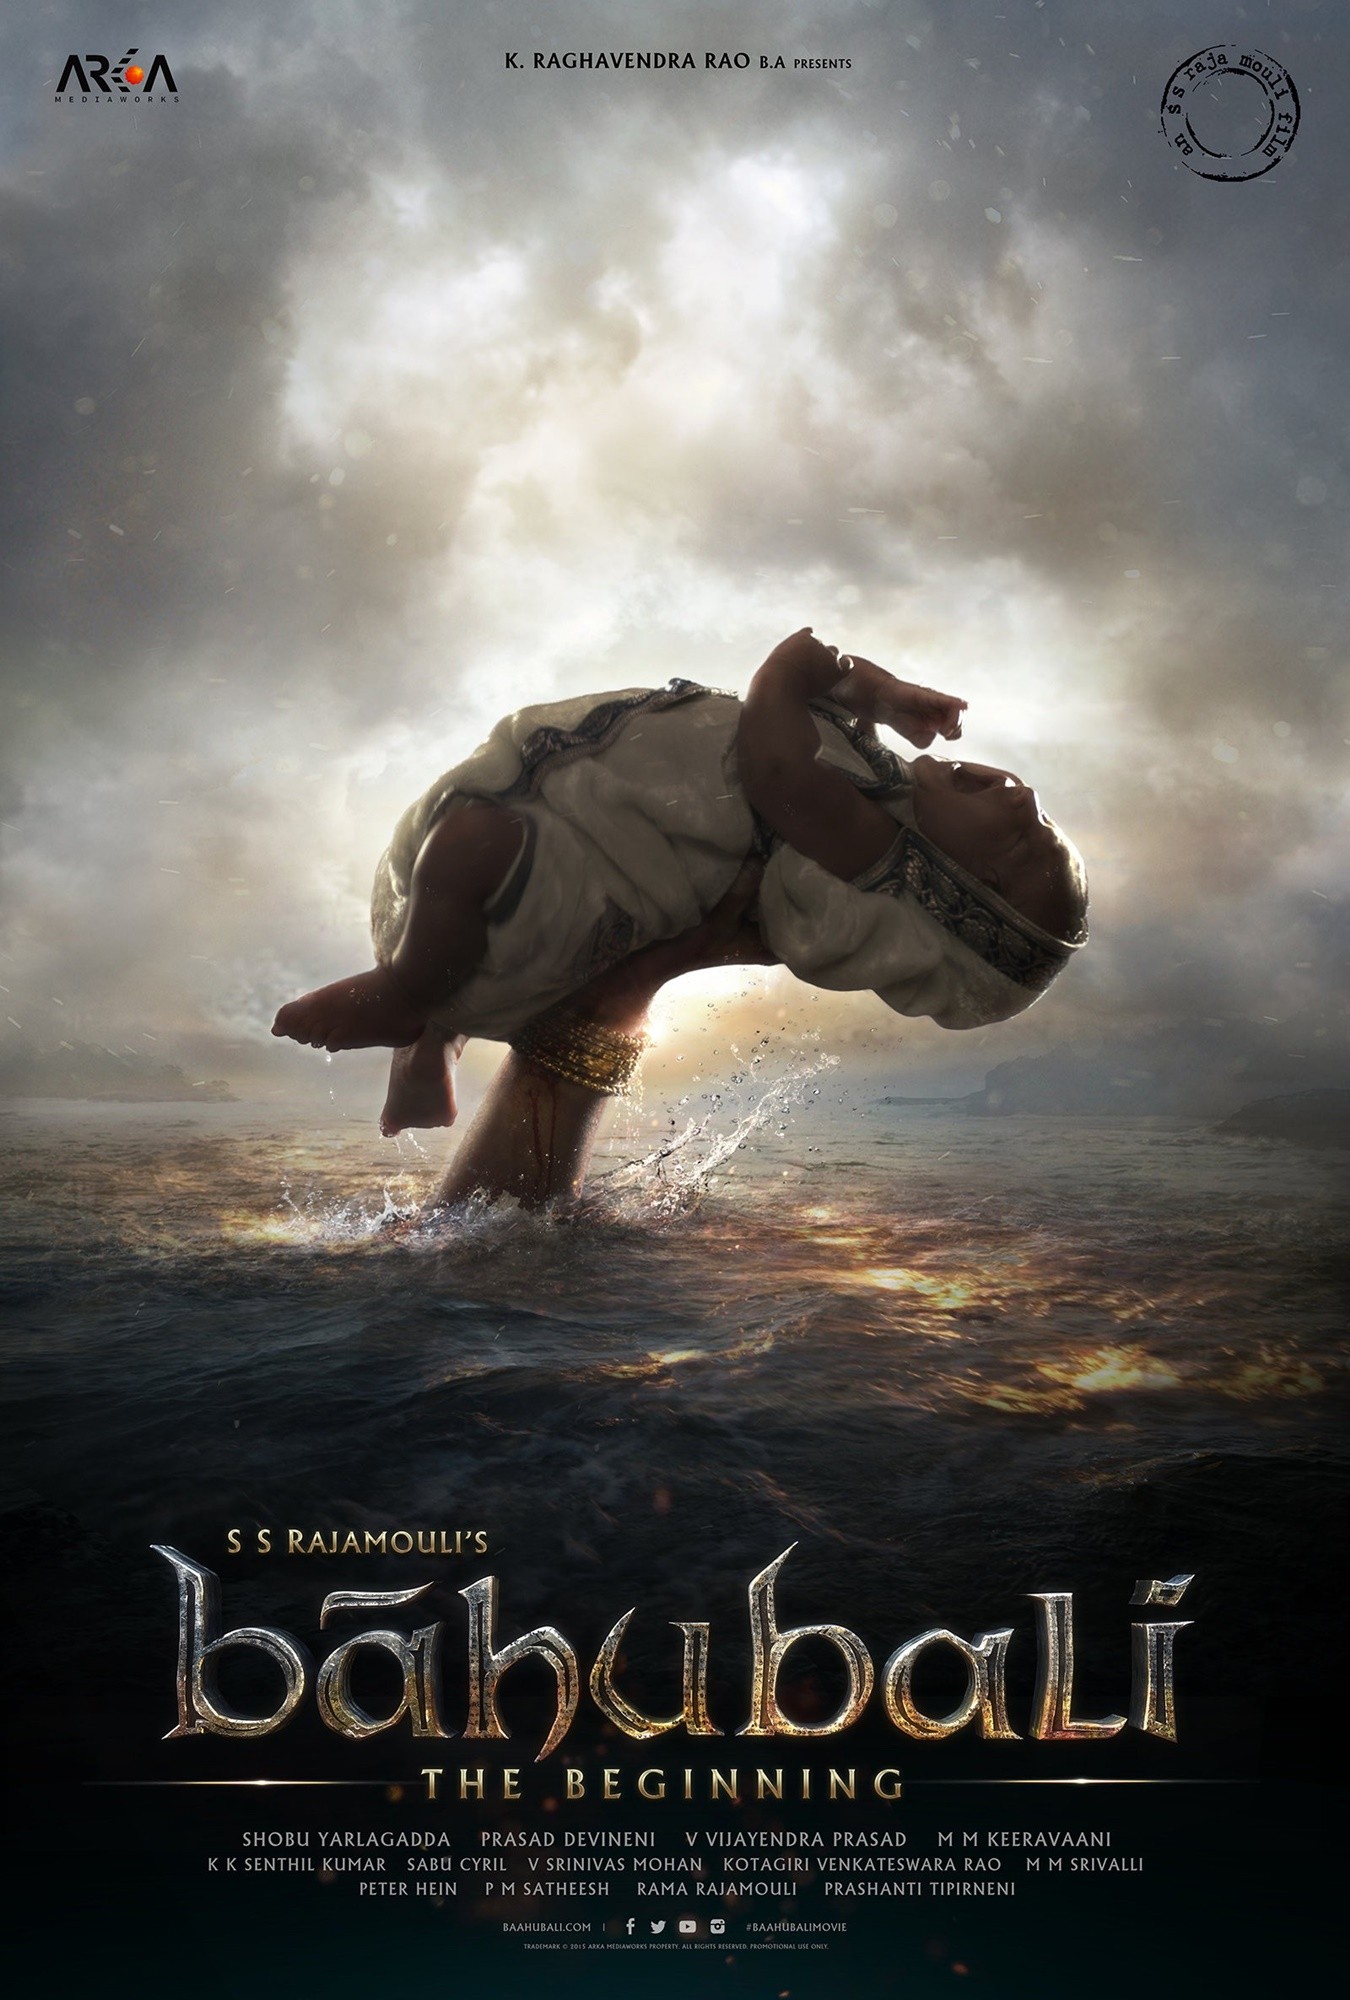 Poster of Arka Mediaworks' Baahubali: The Beginning (2015)